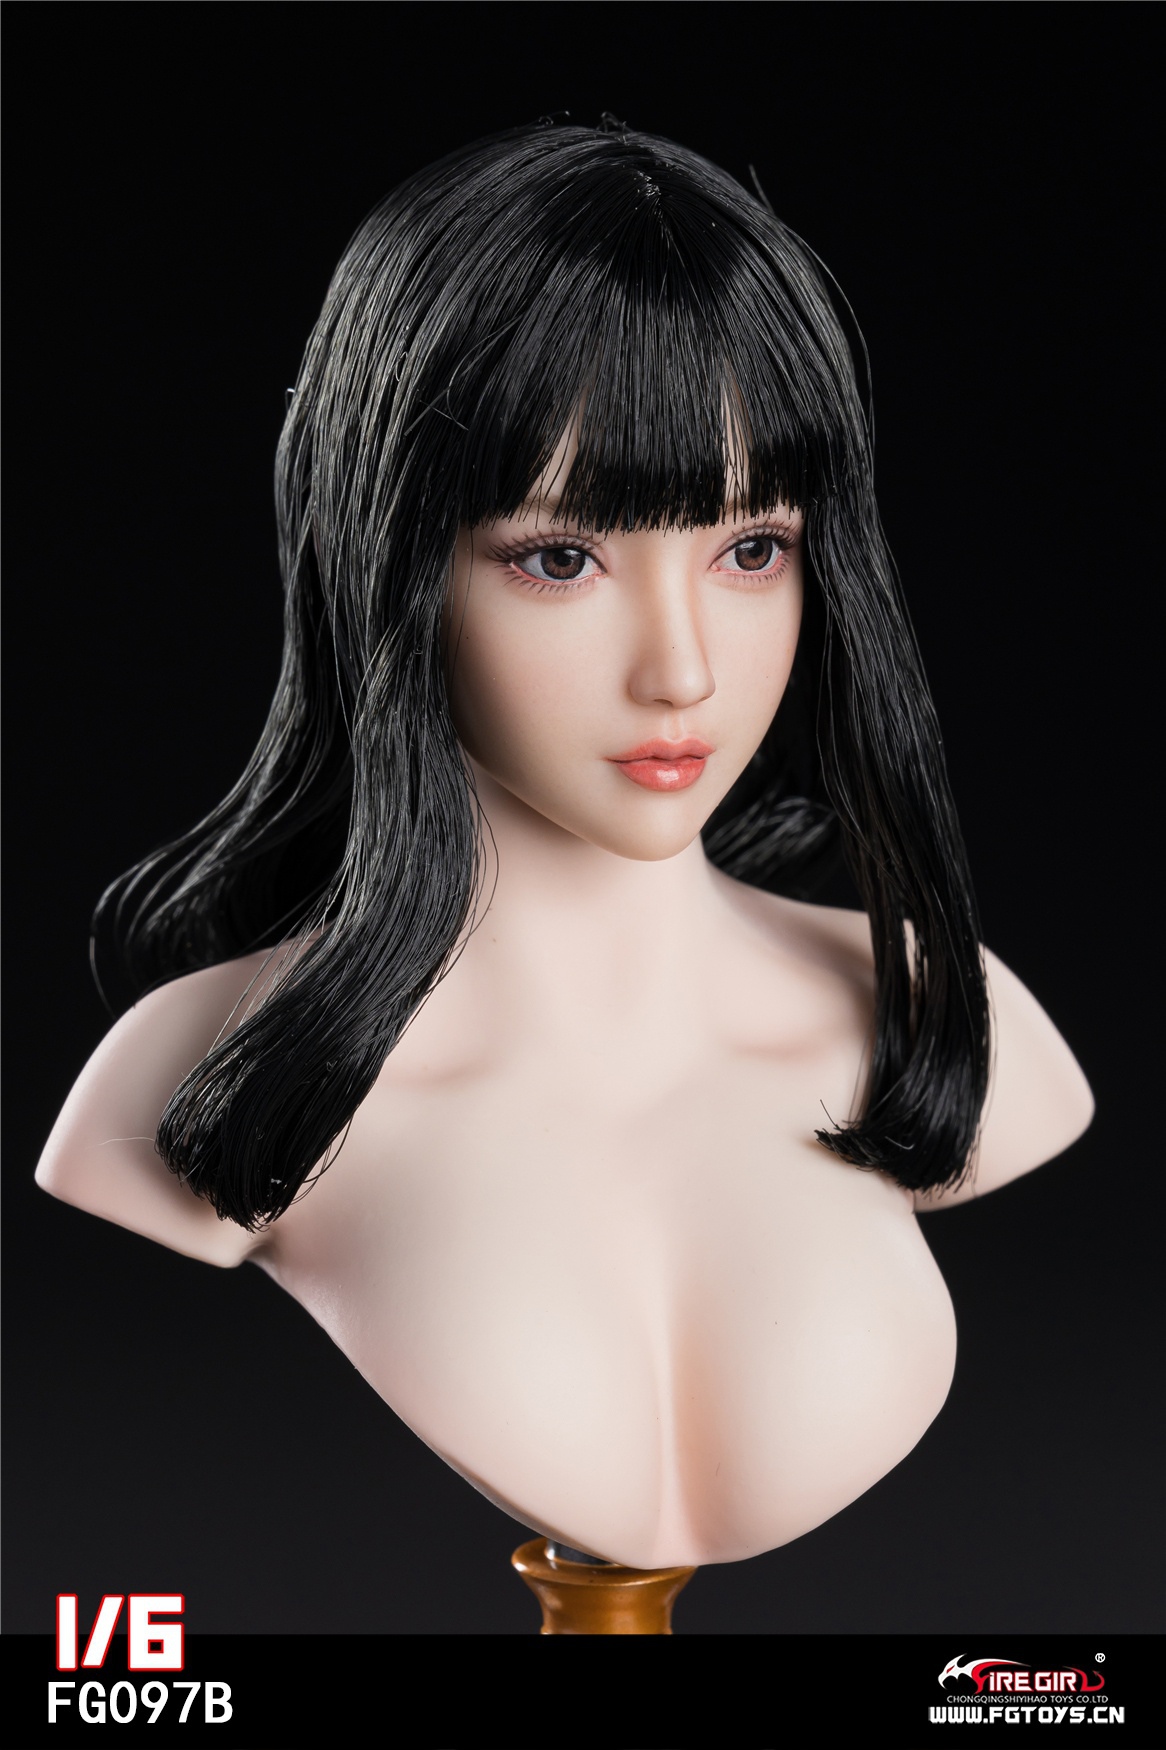 Headsculpt - NEW PRODUCT: Fire Girl Toys: Asian Girl Head Sculpture (FG097A/FG097B/FG097C) 1173